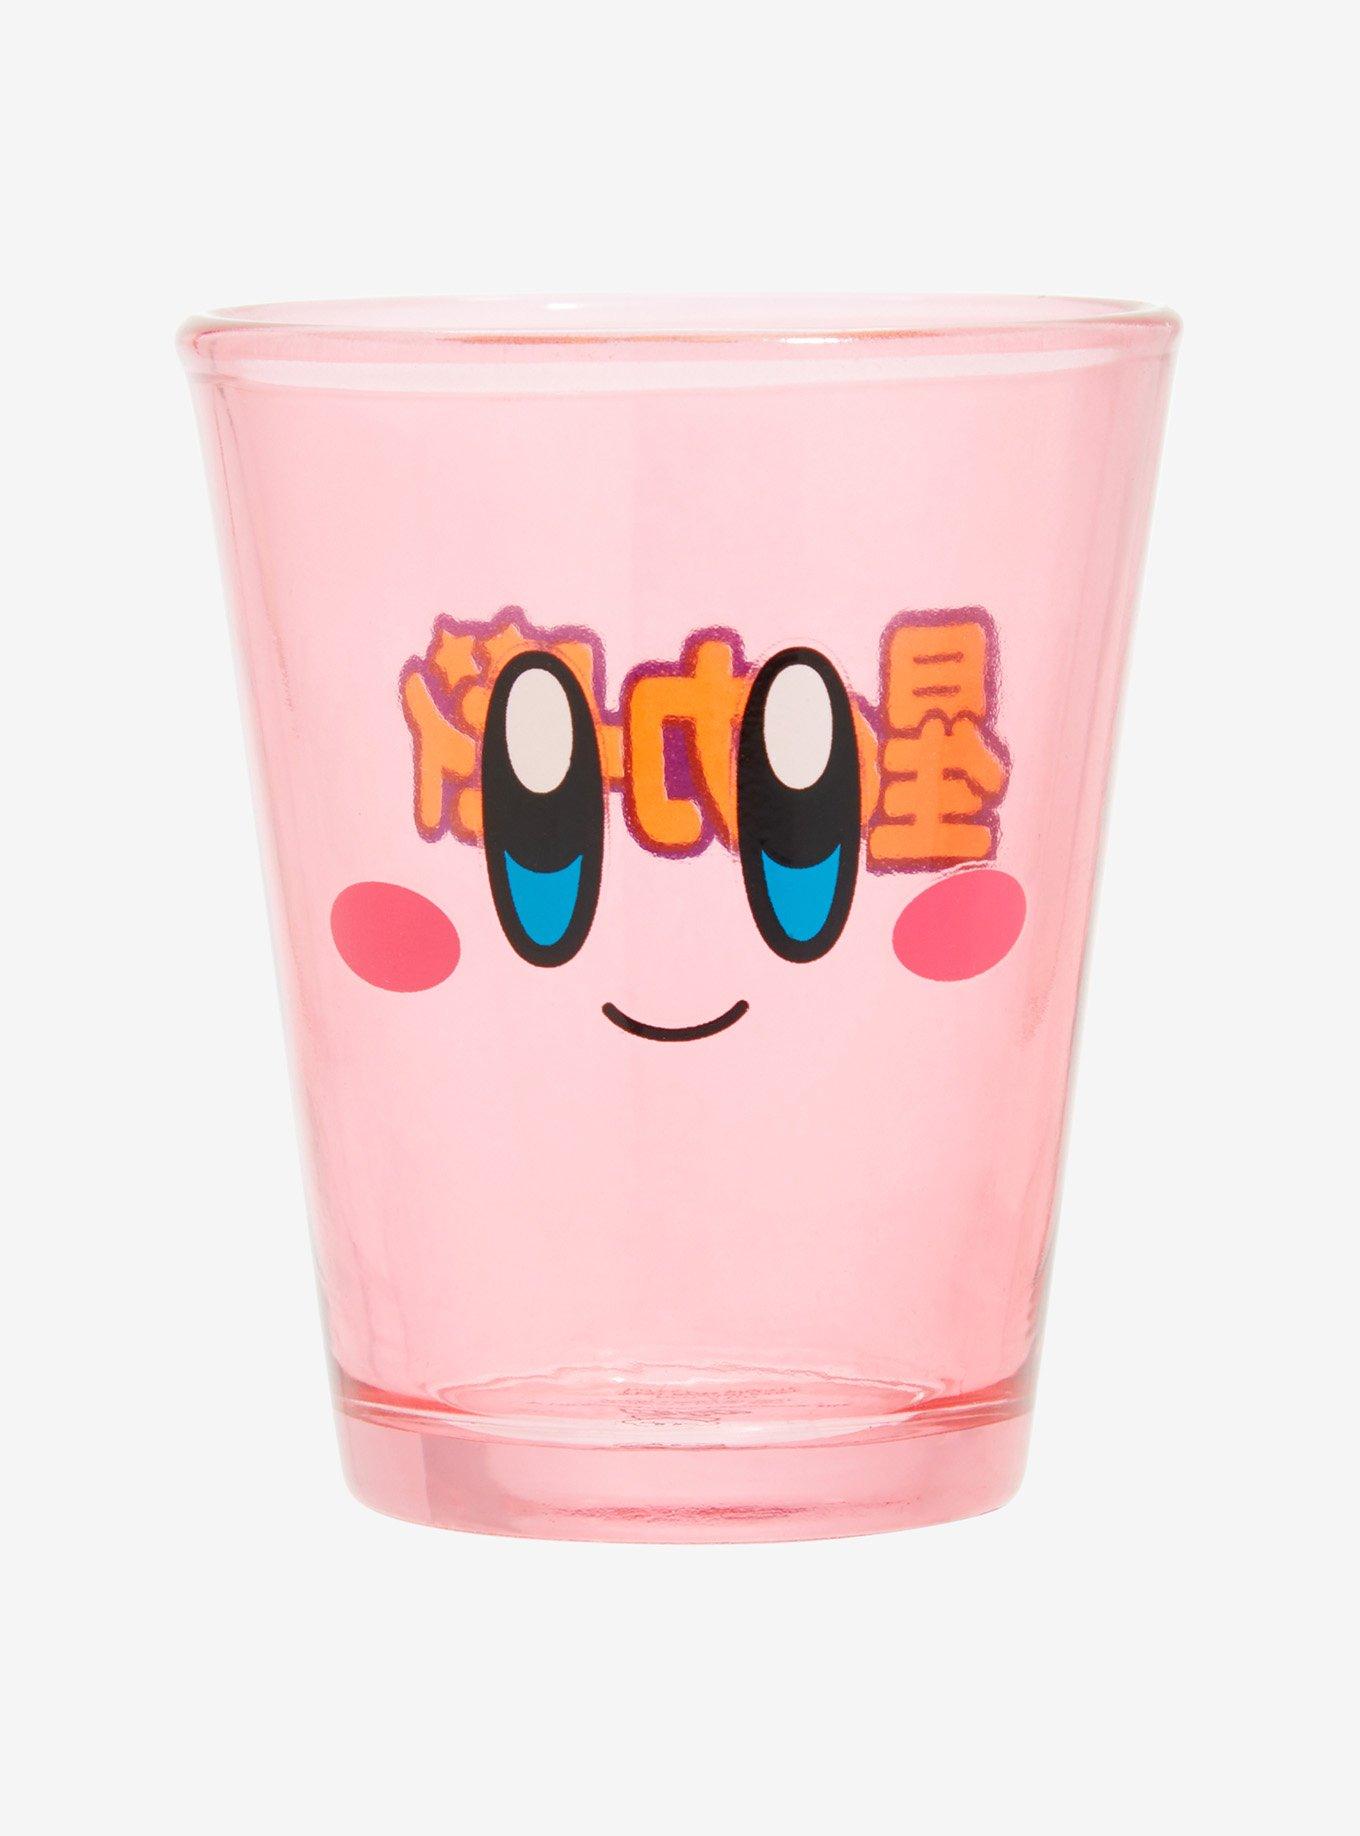 Kirby Big Face 16 oz. Mug